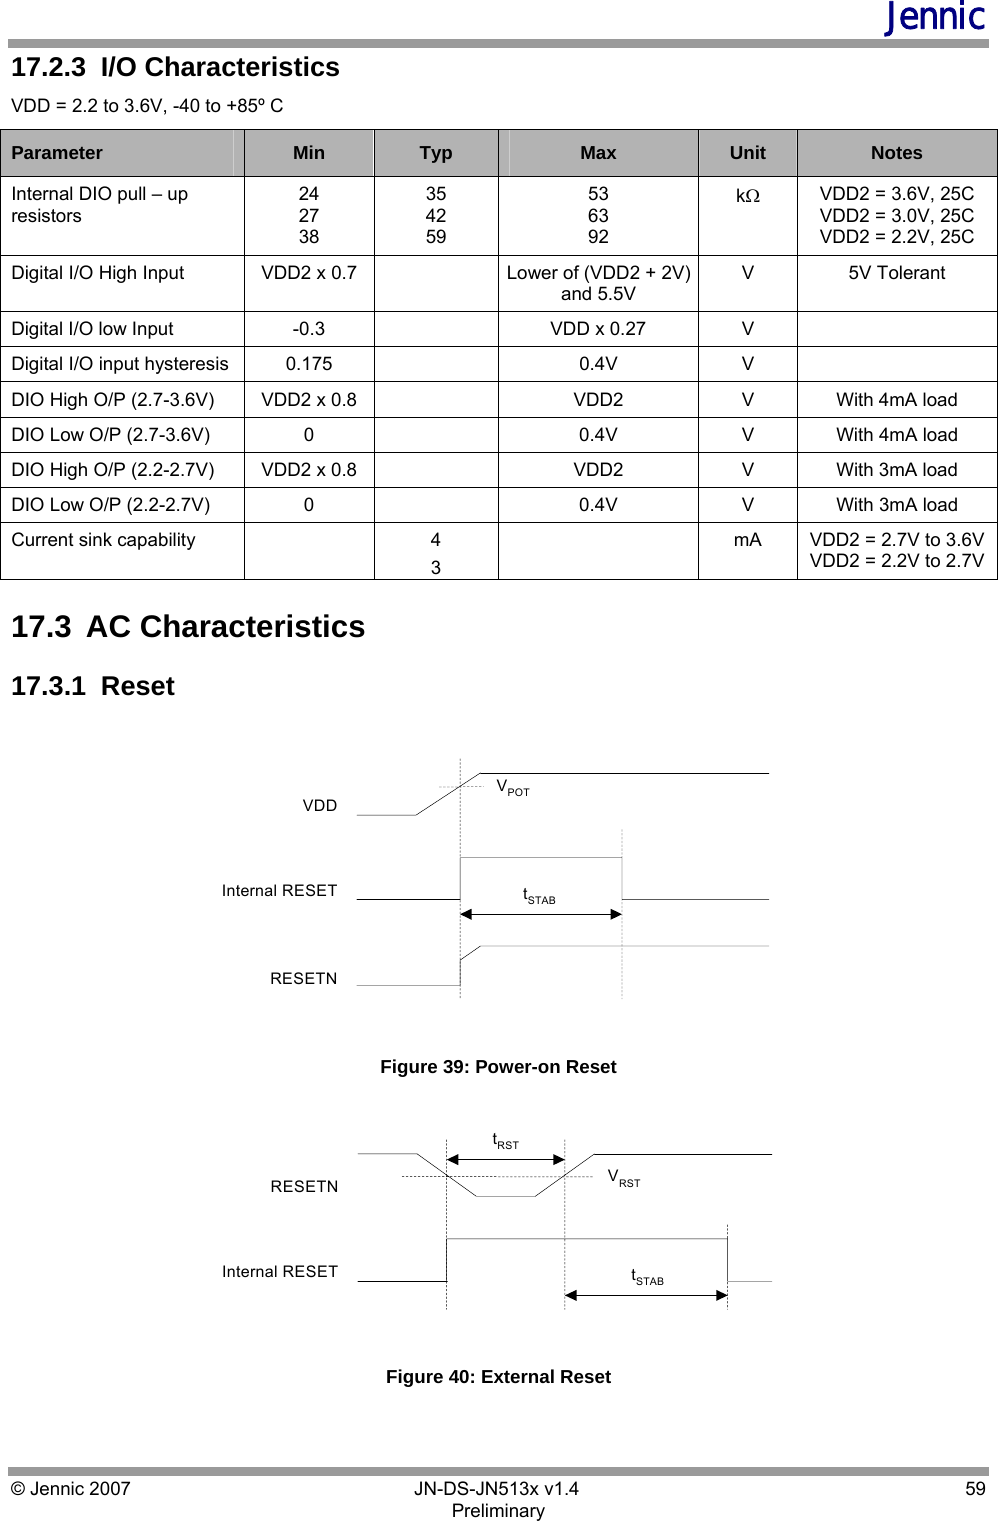 Jennic © Jennic 2007        JN-DS-JN513x v1.4  59 Preliminary 17.2.3  I/O Characteristics VDD = 2.2 to 3.6V, -40 to +85º C Parameter  Min  Typ  Max  Unit  Notes Internal DIO pull – up resistors 24 27 38 35 42 59 53 63 92 kΩ VDD2 = 3.6V, 25C VDD2 = 3.0V, 25C VDD2 = 2.2V, 25C Digital I/O High Input  VDD2 x 0.7    Lower of (VDD2 + 2V) and 5.5V V 5V Tolerant Digital I/O low Input  -0.3    VDD x 0.27  V   Digital I/O input hysteresis  0.175    0.4V  V   DIO High O/P (2.7-3.6V)  VDD2 x 0.8    VDD2  V  With 4mA load DIO Low O/P (2.7-3.6V)   0    0.4V  V  With 4mA load DIO High O/P (2.2-2.7V)  VDD2 x 0.8    VDD2  V  With 3mA load DIO Low O/P (2.2-2.7V)  0    0.4V  V  With 3mA load Current sink capability    4 3   mA  VDD2 = 2.7V to 3.6V VDD2 = 2.2V to 2.7V 17.3  AC Characteristics 17.3.1  Reset RESETNInternal RESETVDDVPOTtSTAB Figure 39: Power-on Reset Internal RESETRESETN VRSTtSTABtRST Figure 40: External Reset 